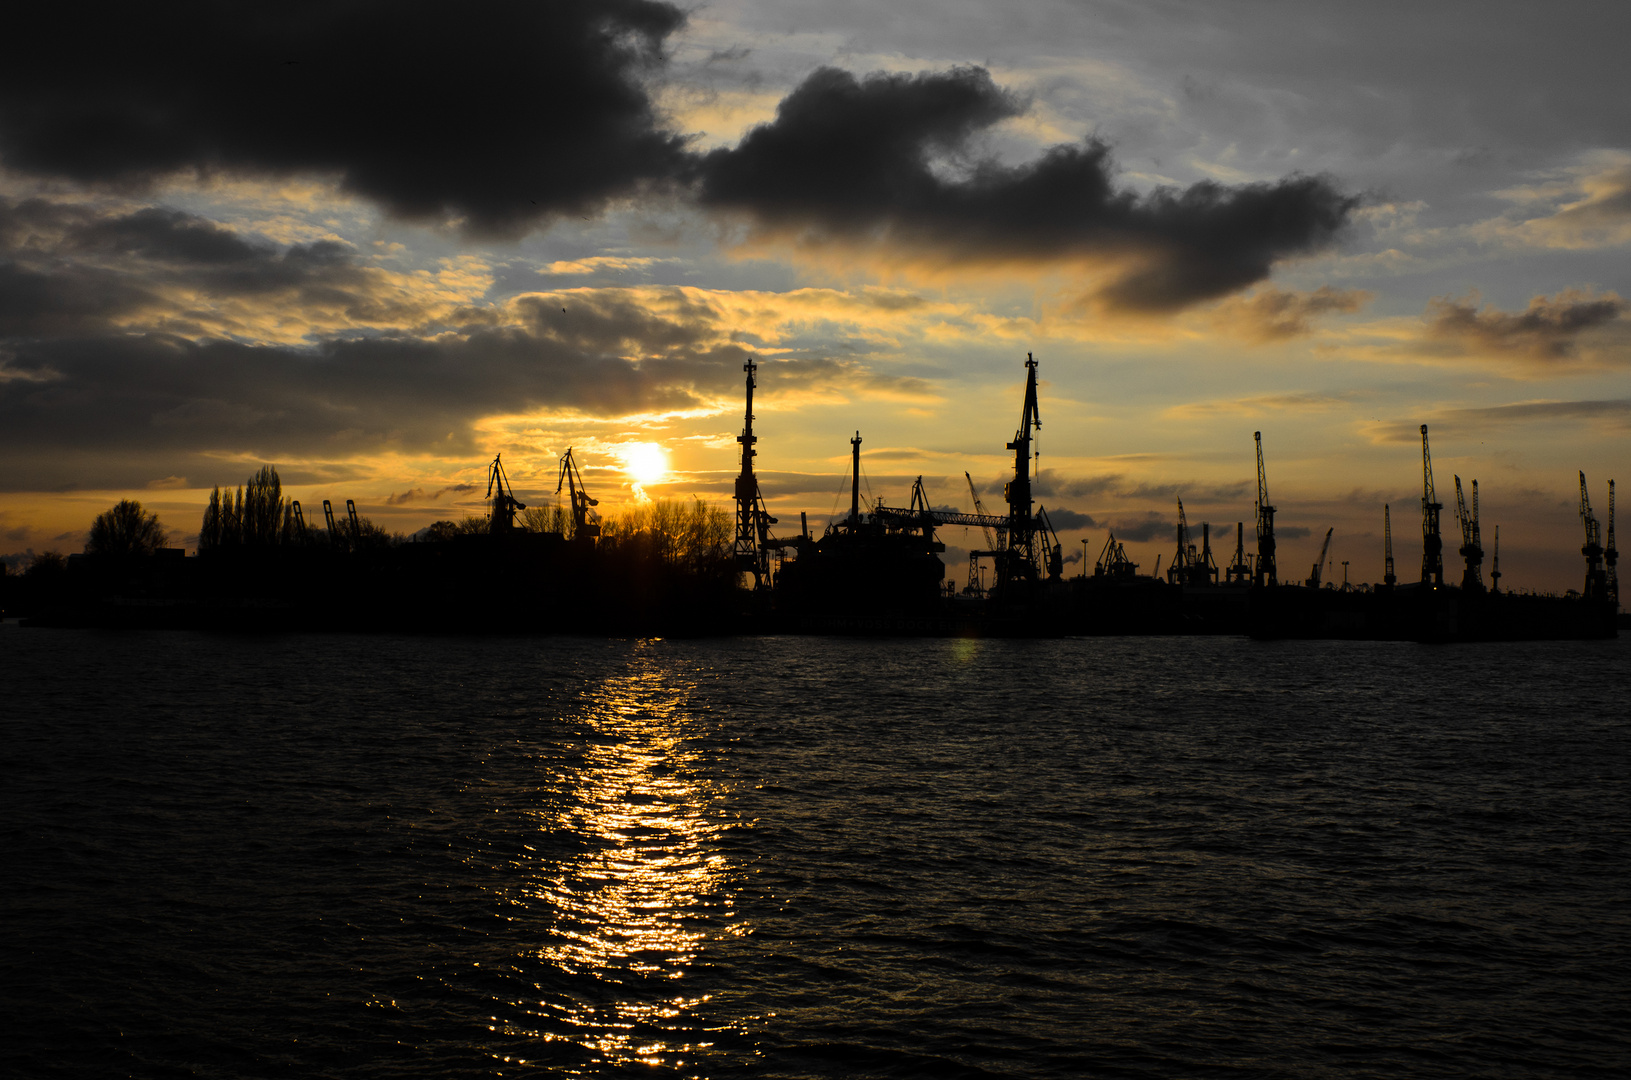 Sonnenuntergang am Hamburger Hafen